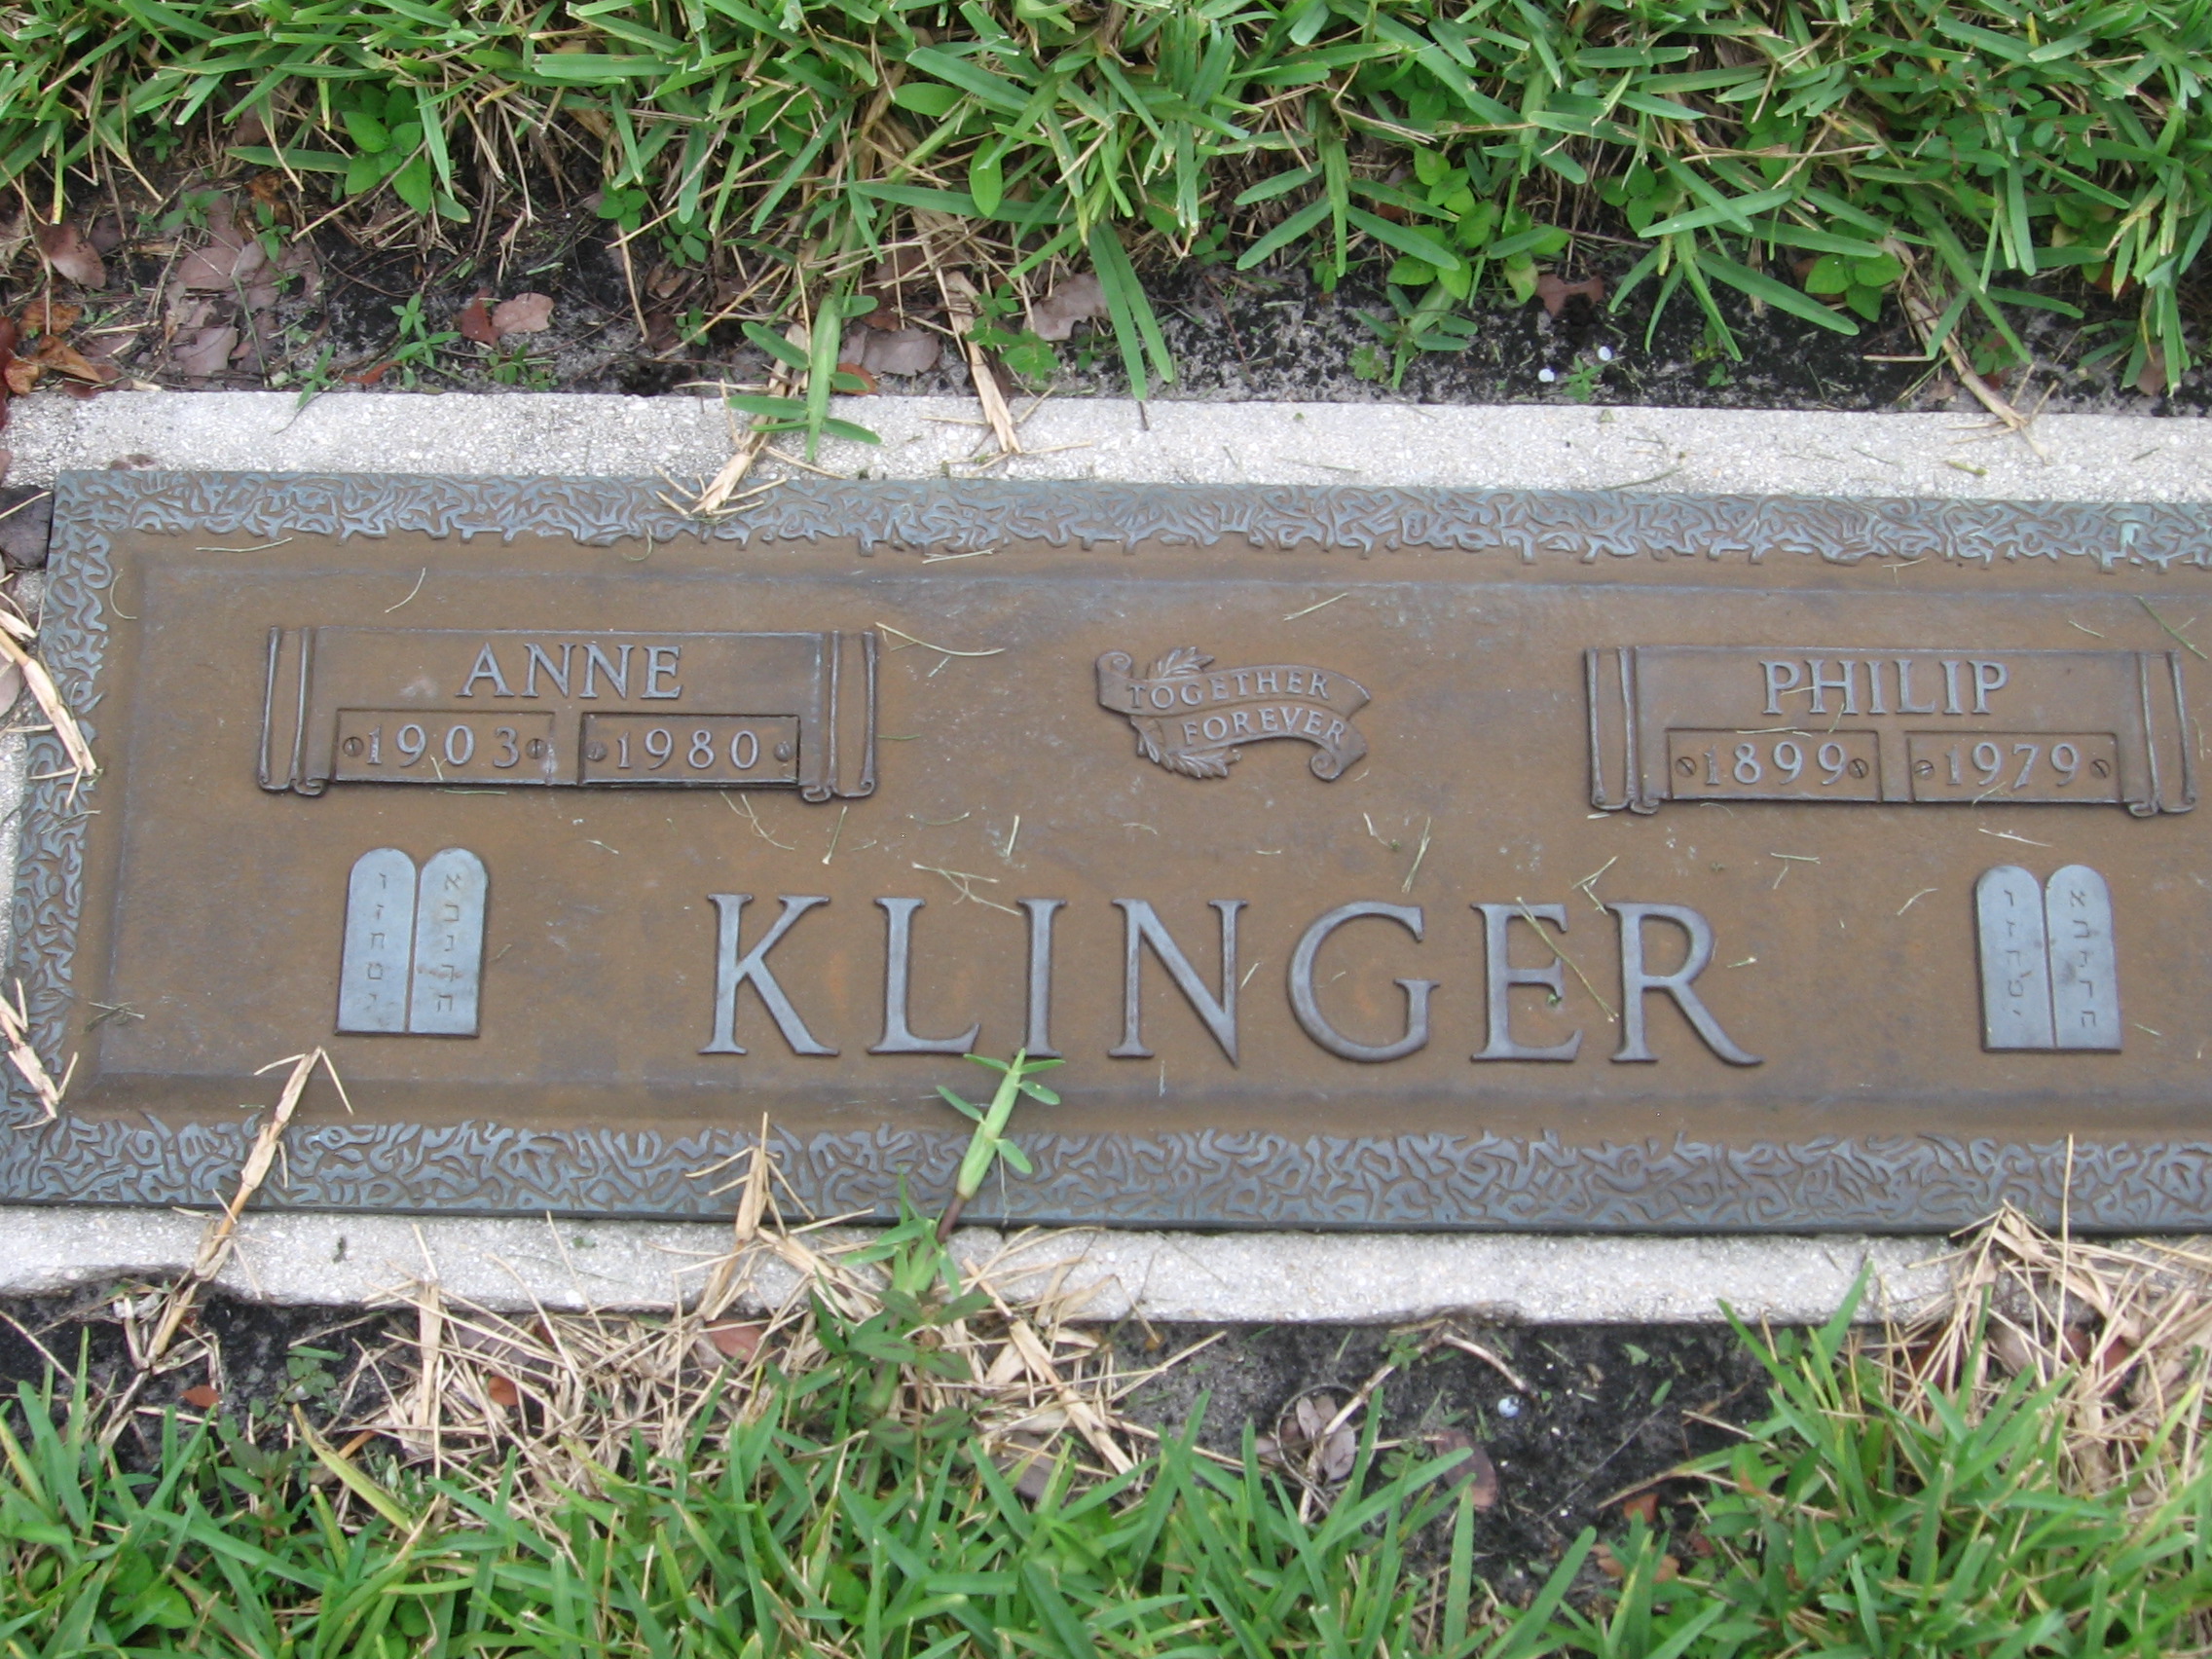 Philip Klinger